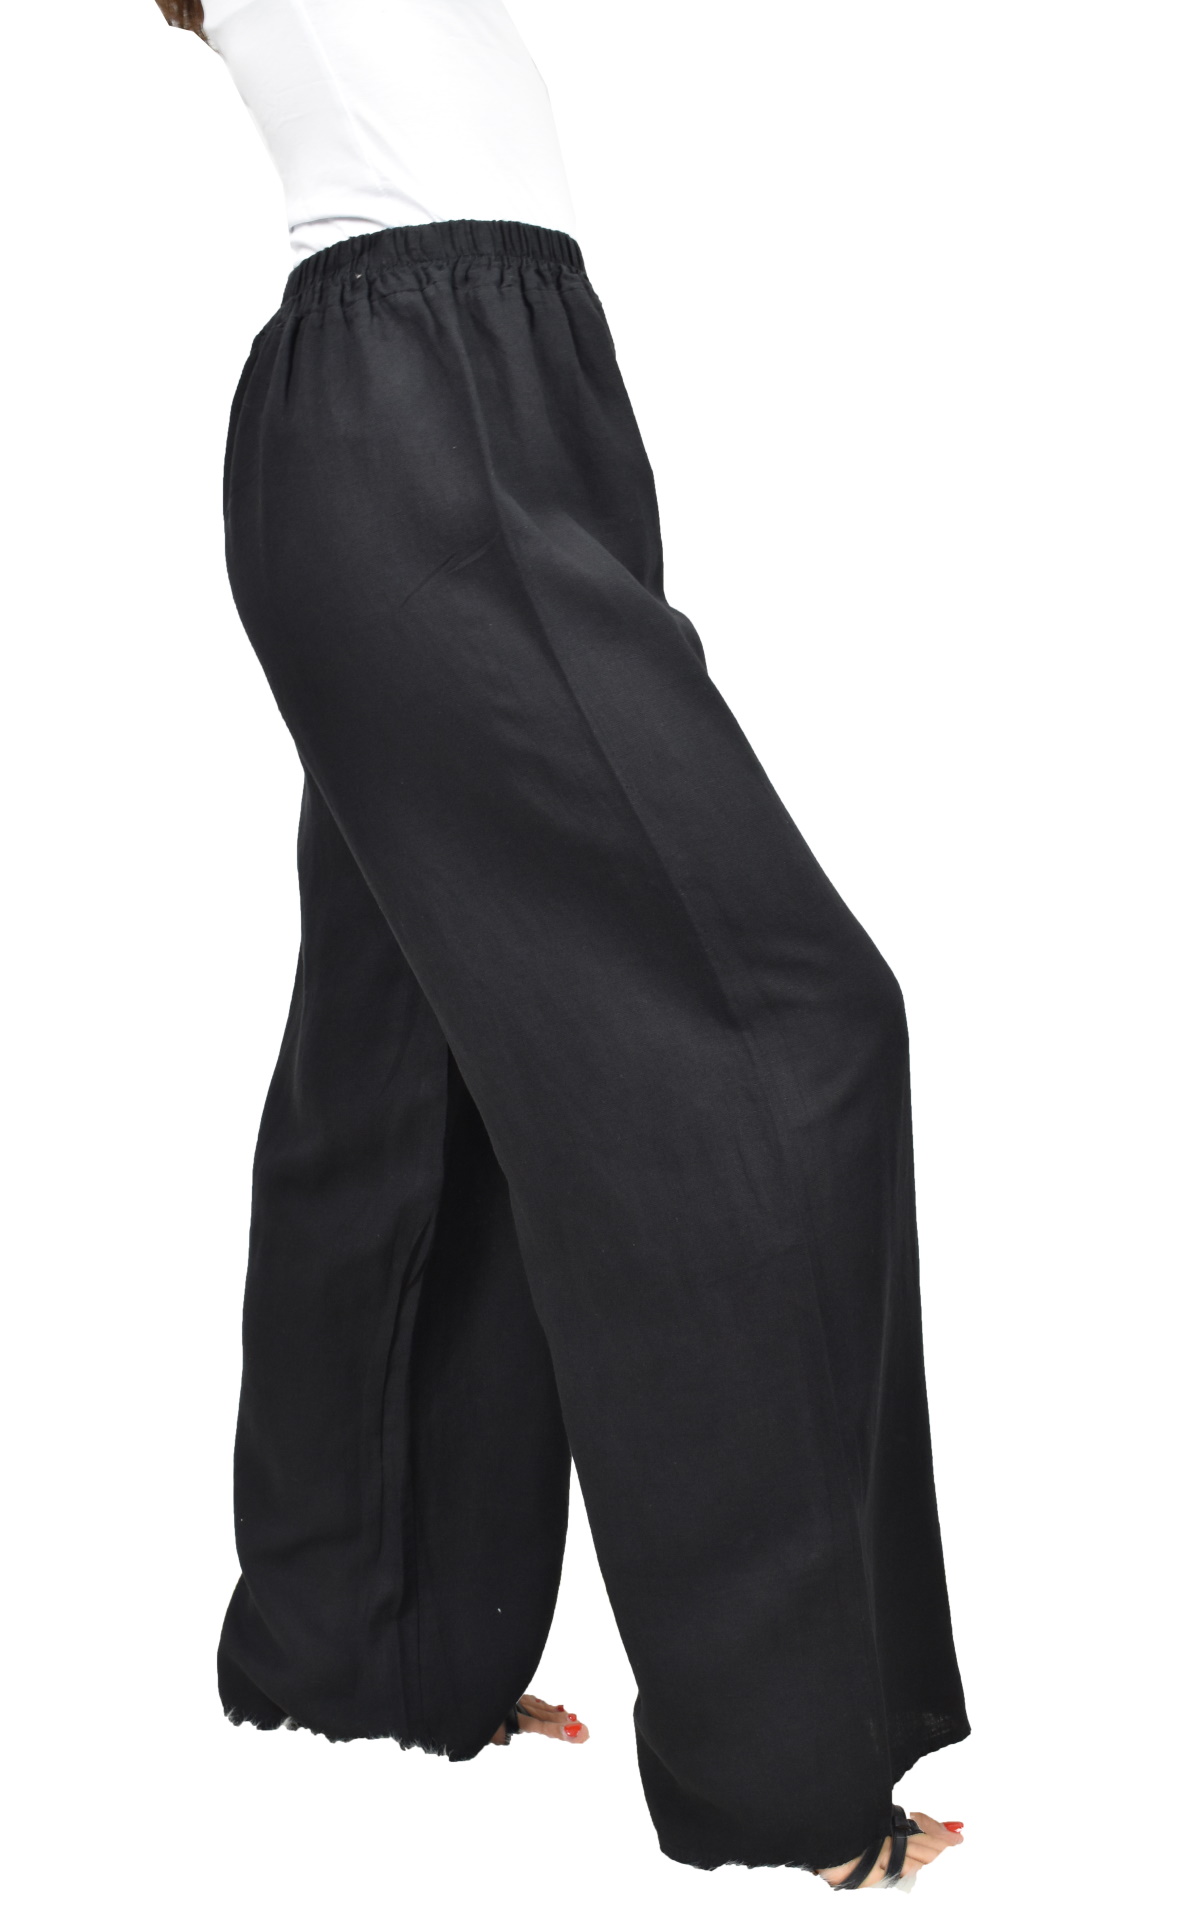 PANMAXPE2102 NERO PANTALONE DA DONNA A GAMBA LARGA 100 LINO 3 1stAmerican pantalone da donna a gamba larga 100% lino Made in Italy - pantalone mare donna